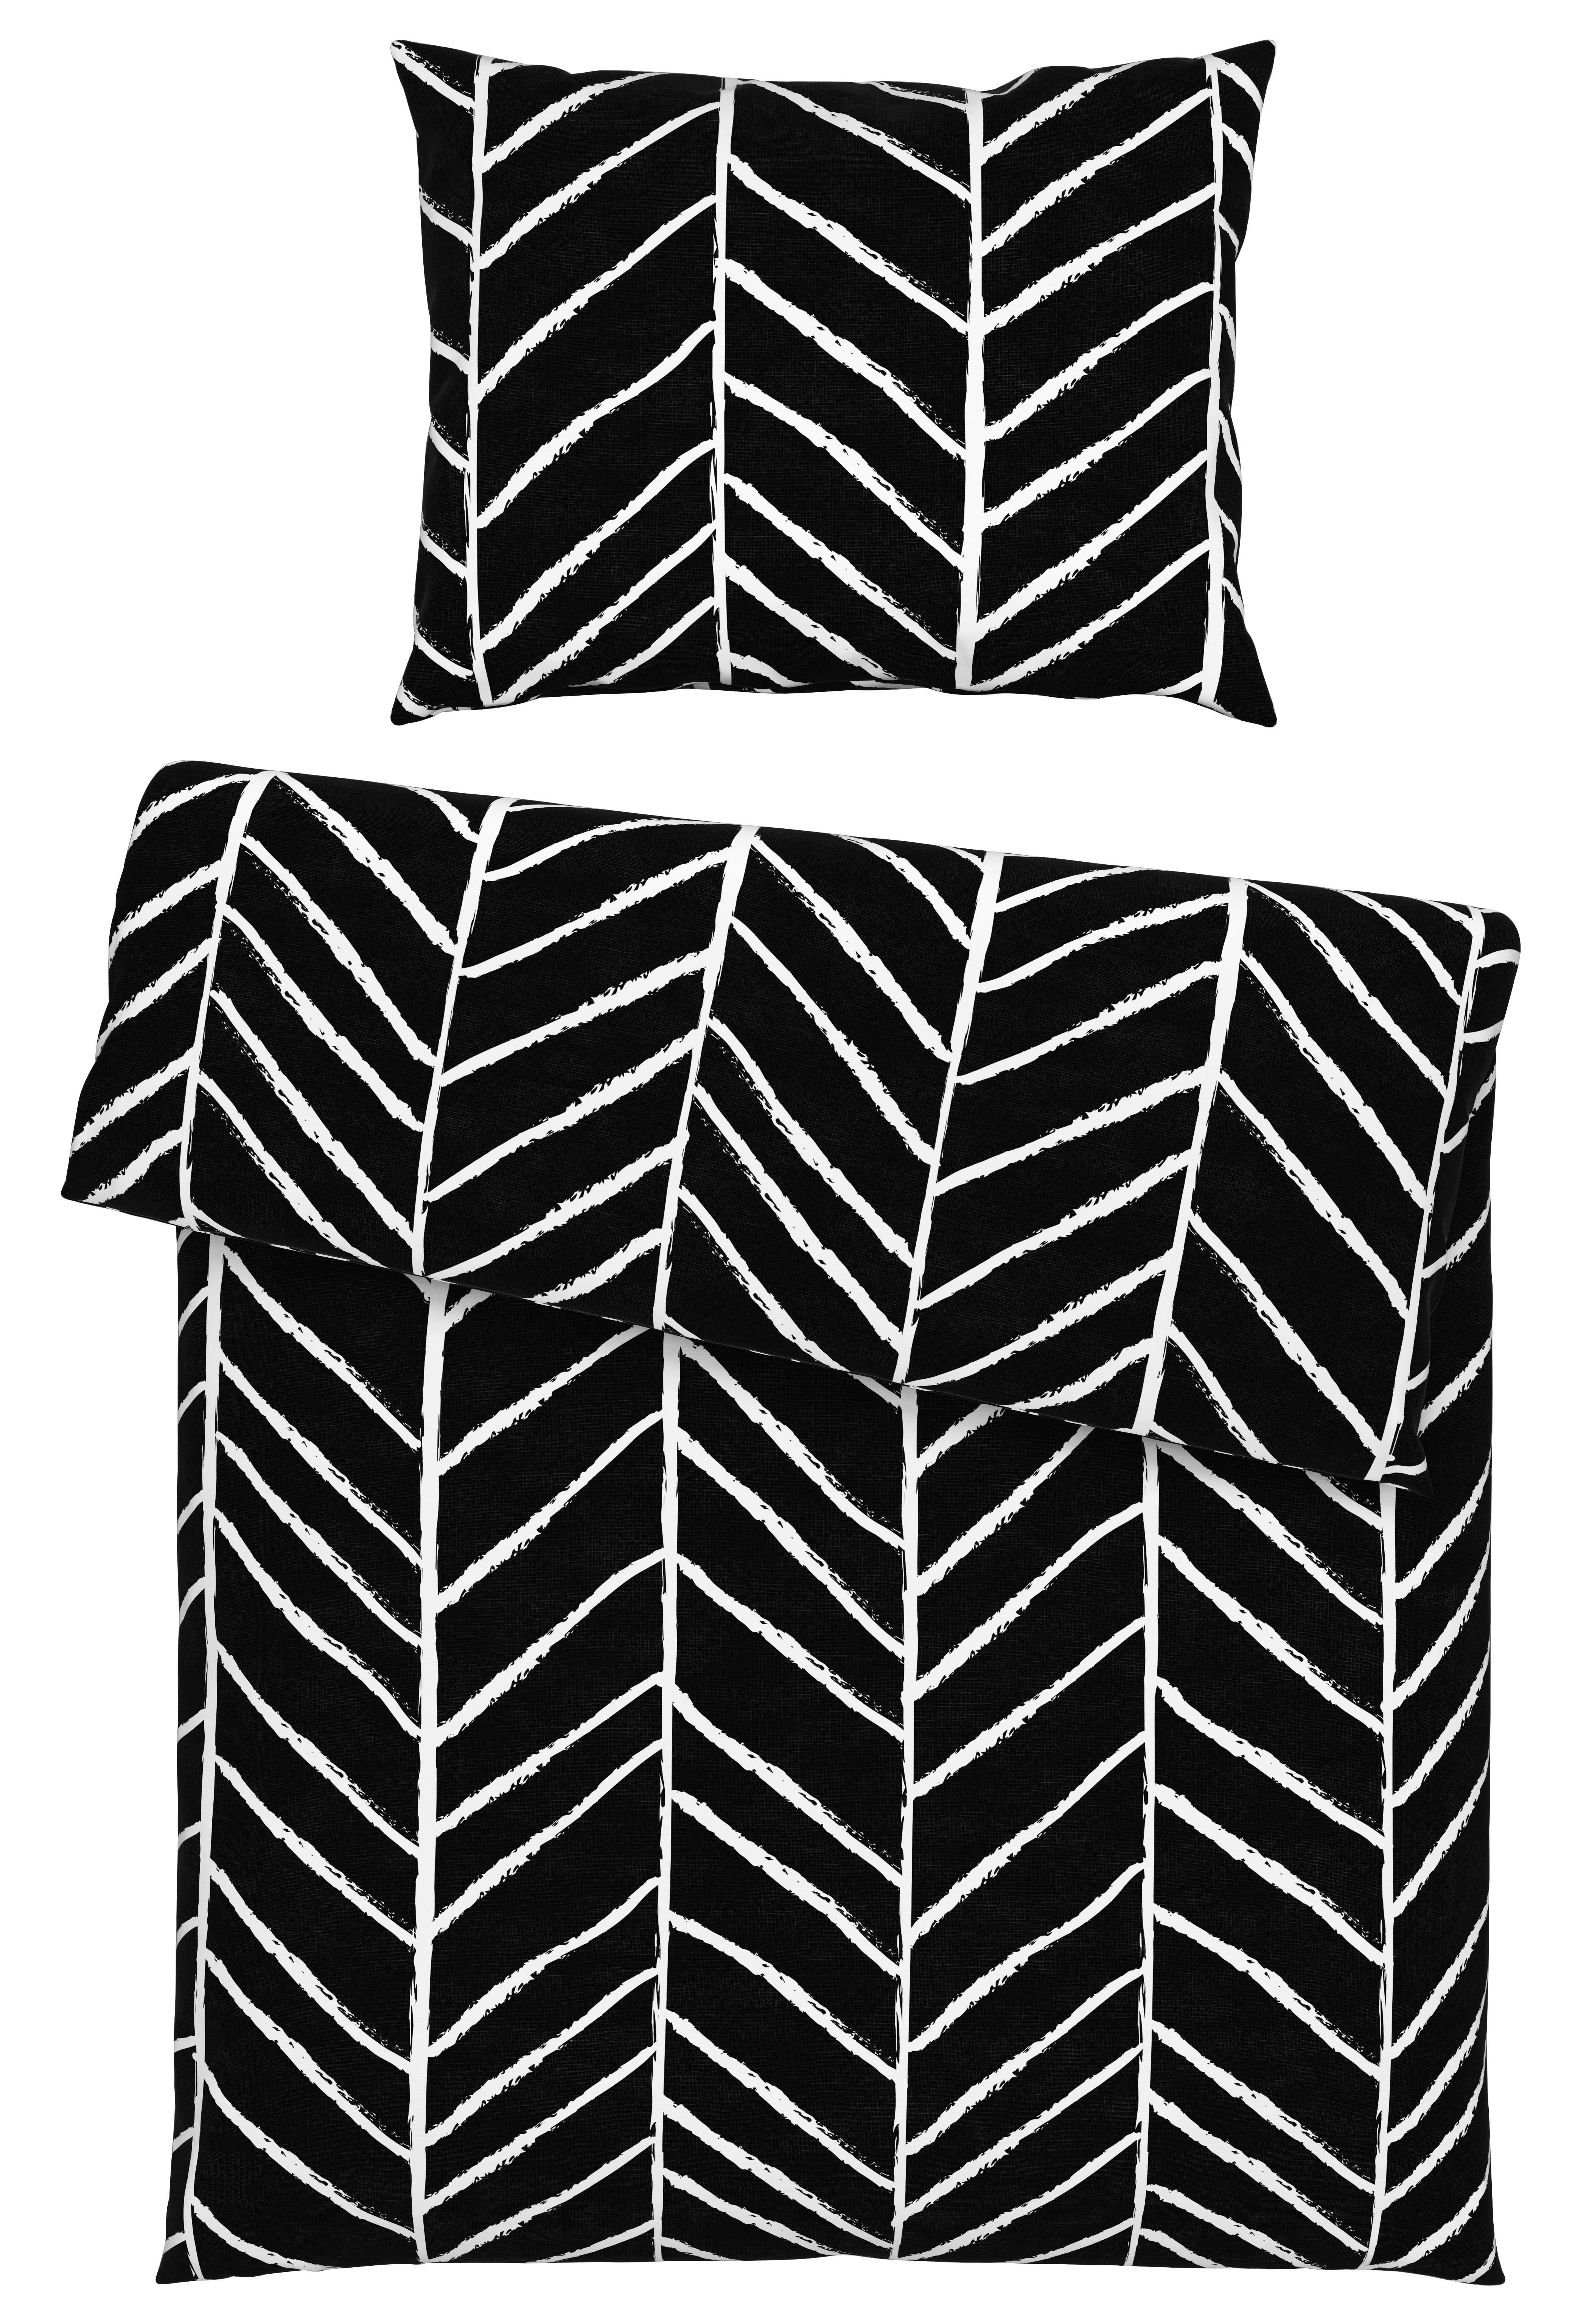 Lenjerie de pat Marble - negru, Konventionell, textil (140/200cm) - Modern Living